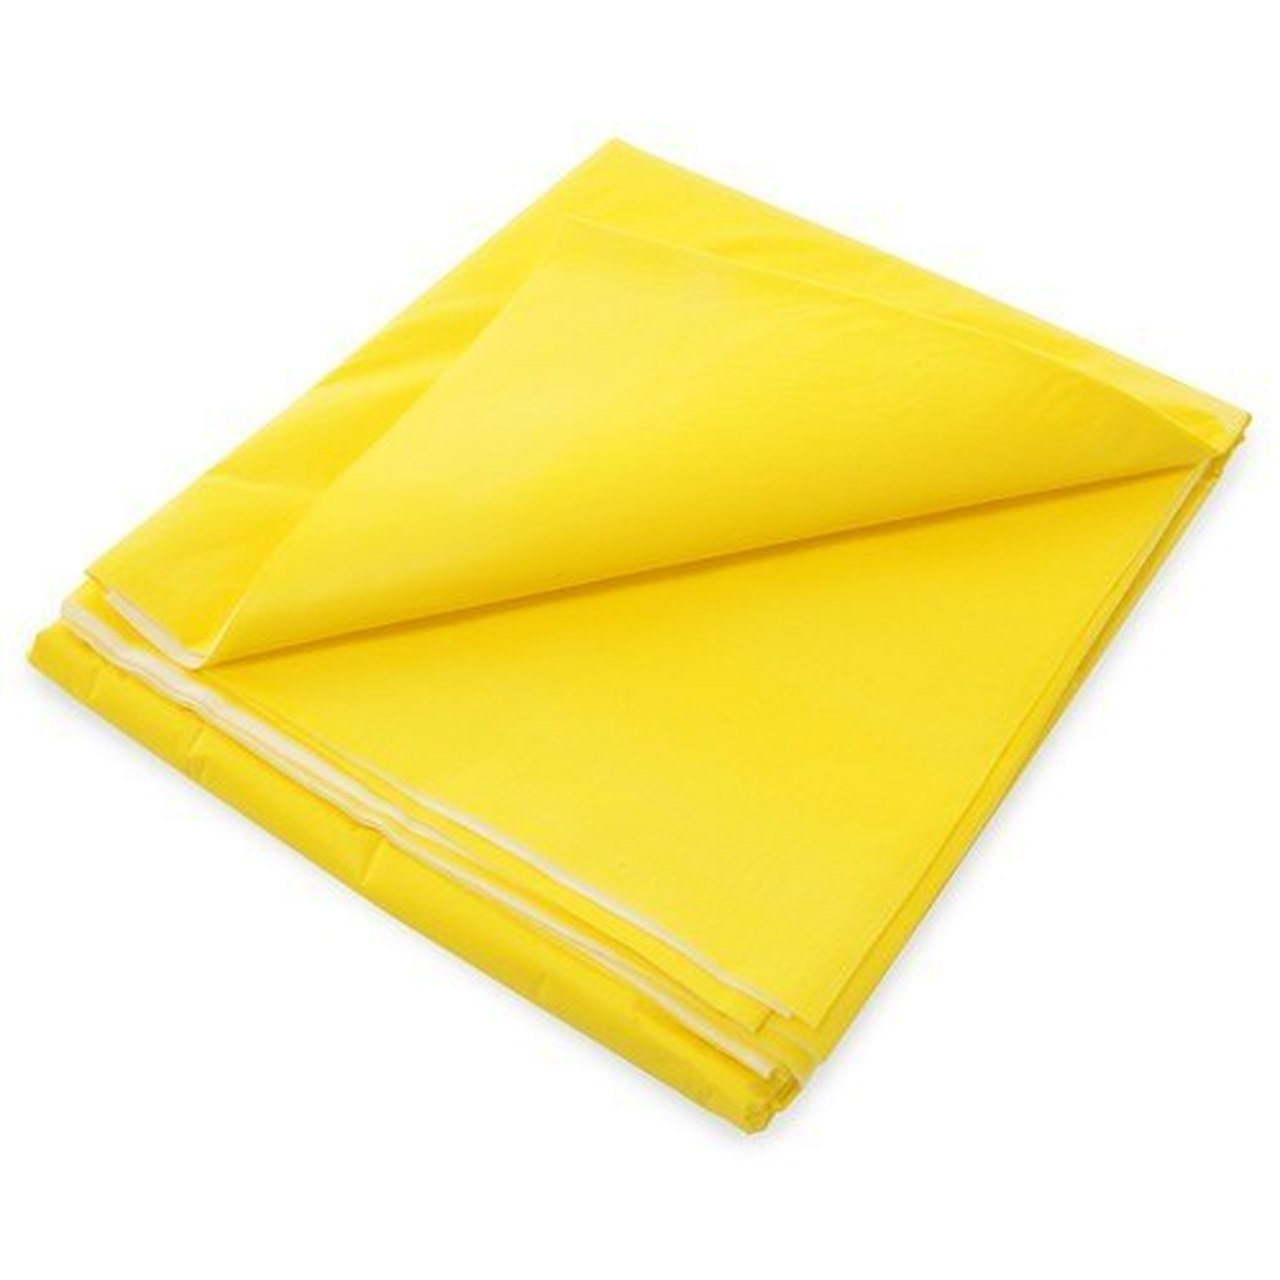 TIDI Yellow Emergency Blanket 56" X 90"